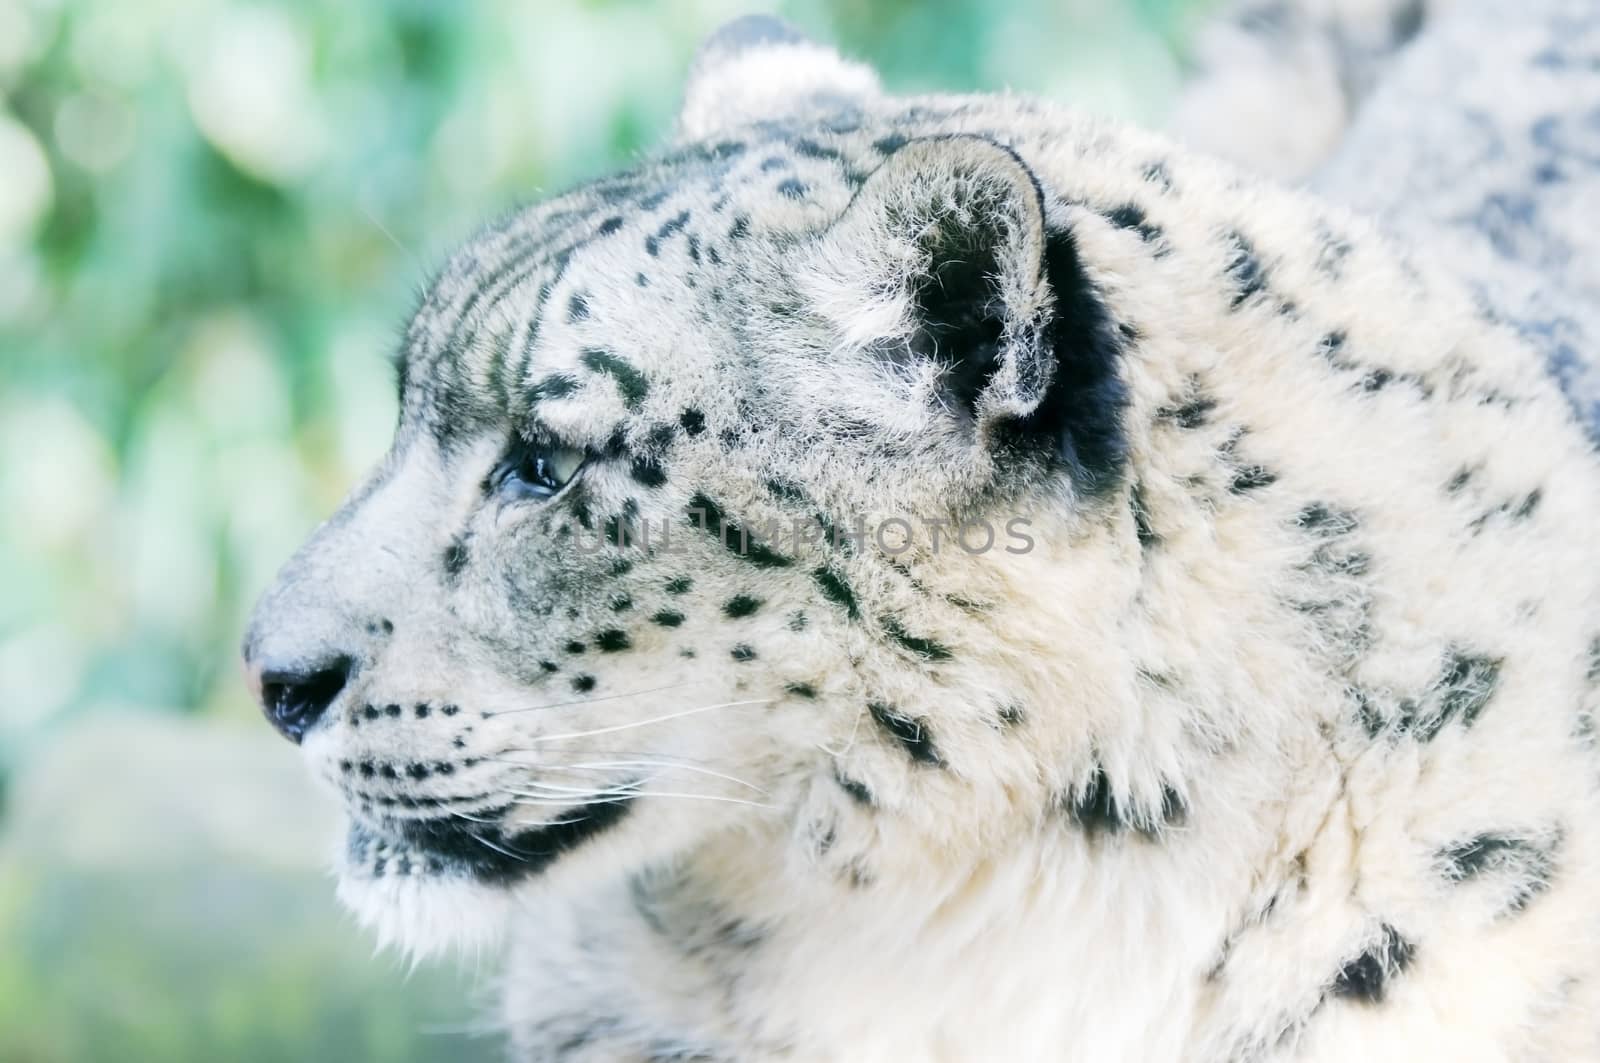 Snow leopard closeup of face looking alert